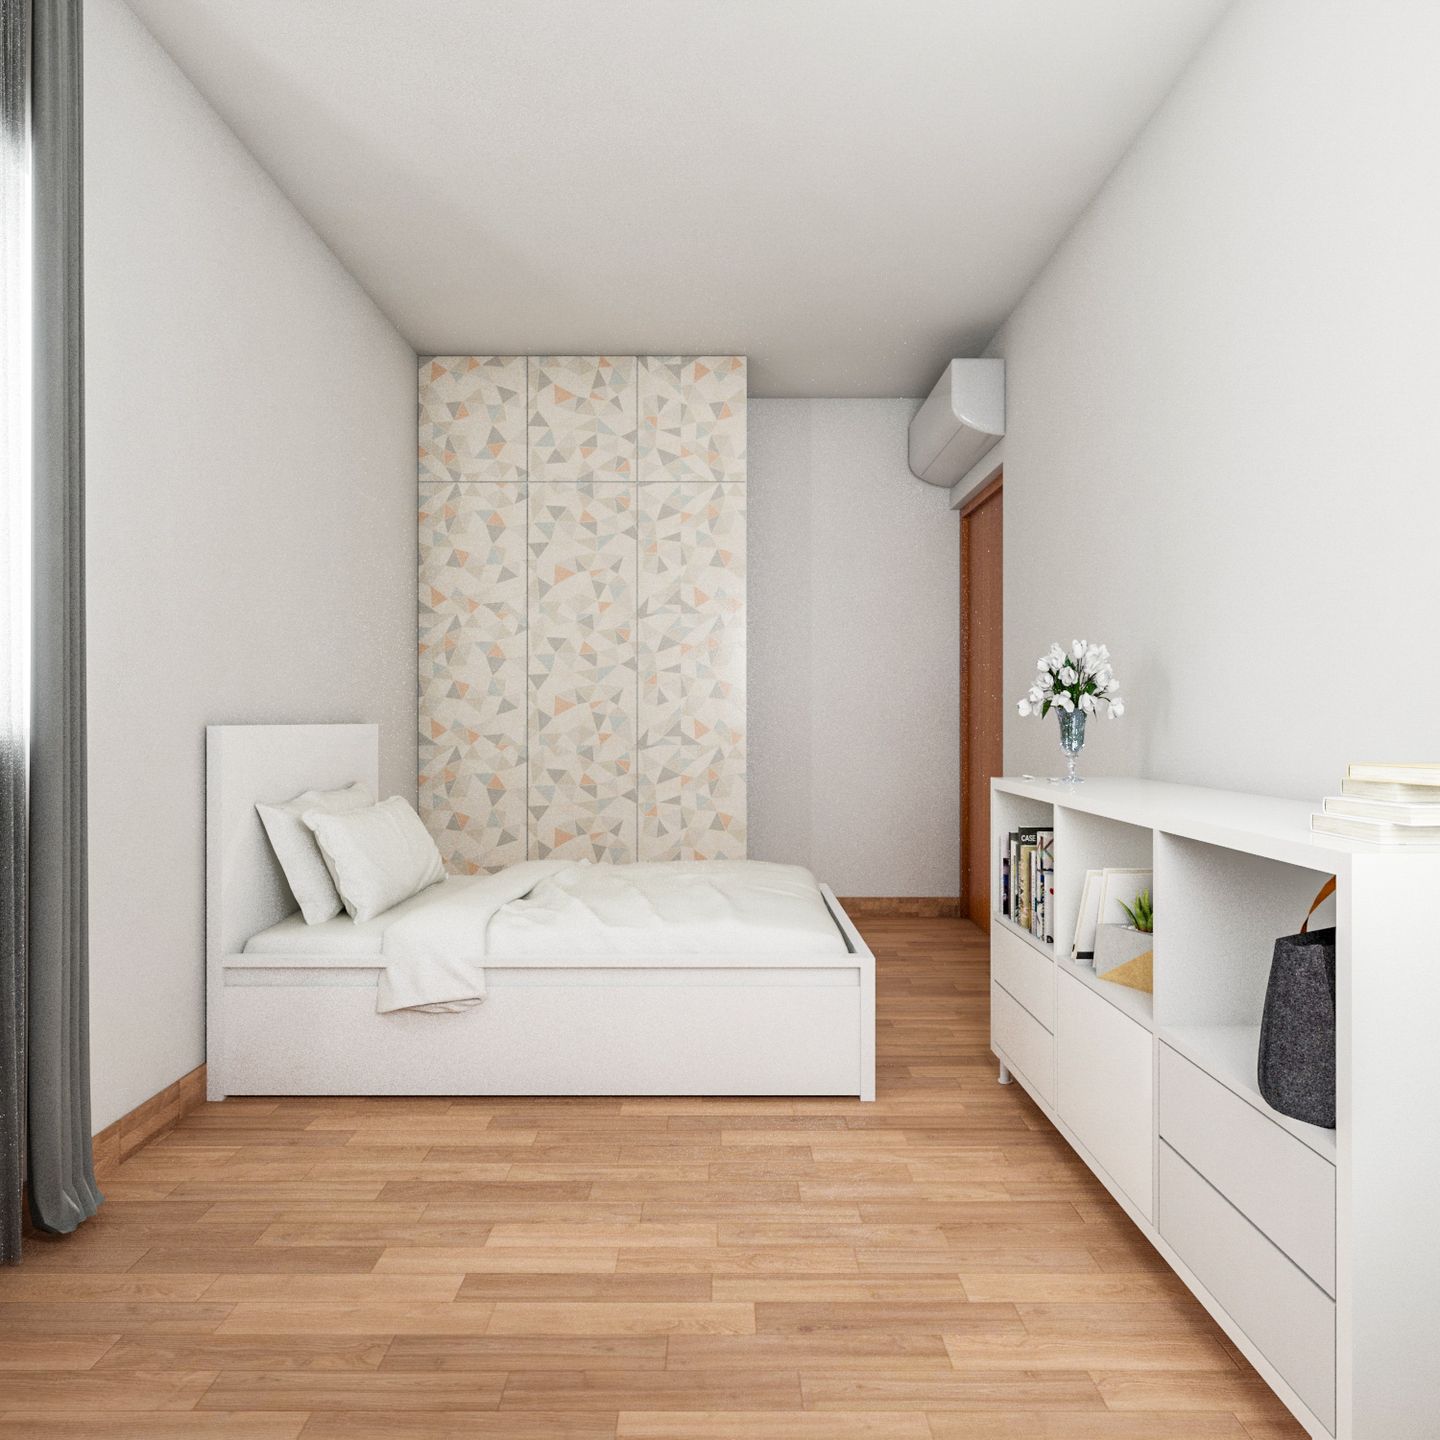 Wardrobe and Lofts Spacious Modern Kids Bedroom Design - Livspace